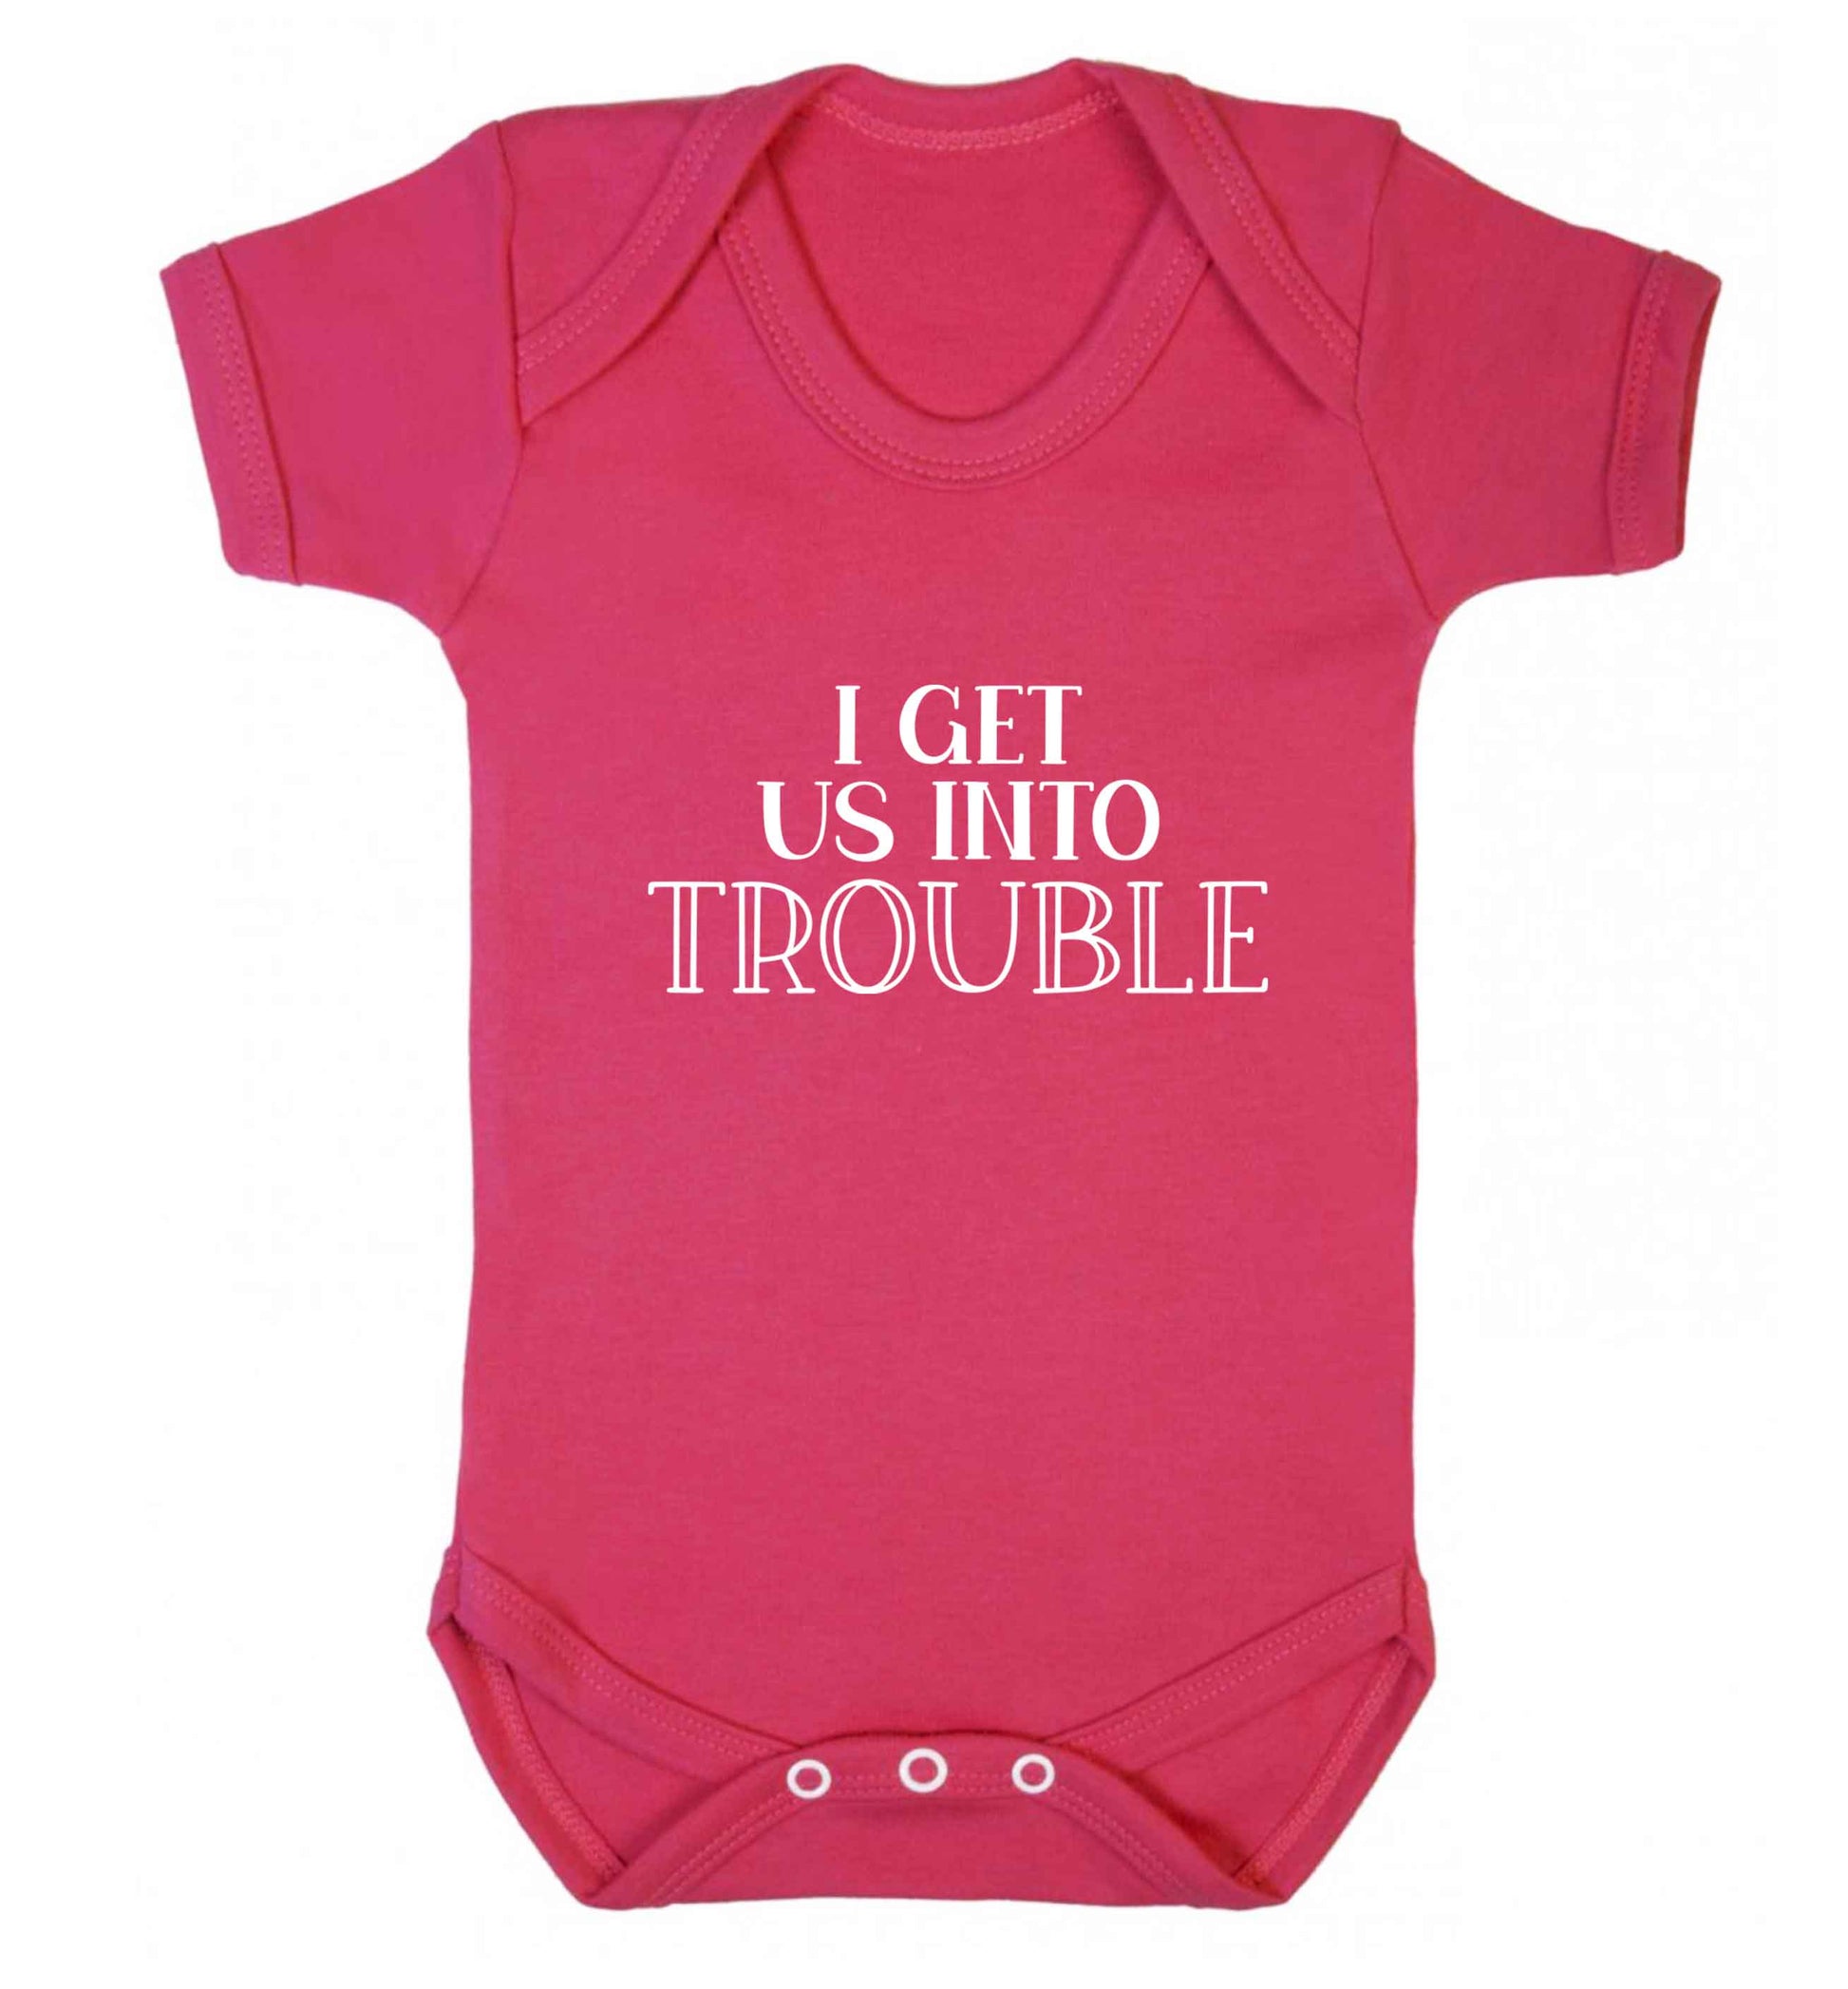 I get us into trouble baby vest dark pink 18-24 months